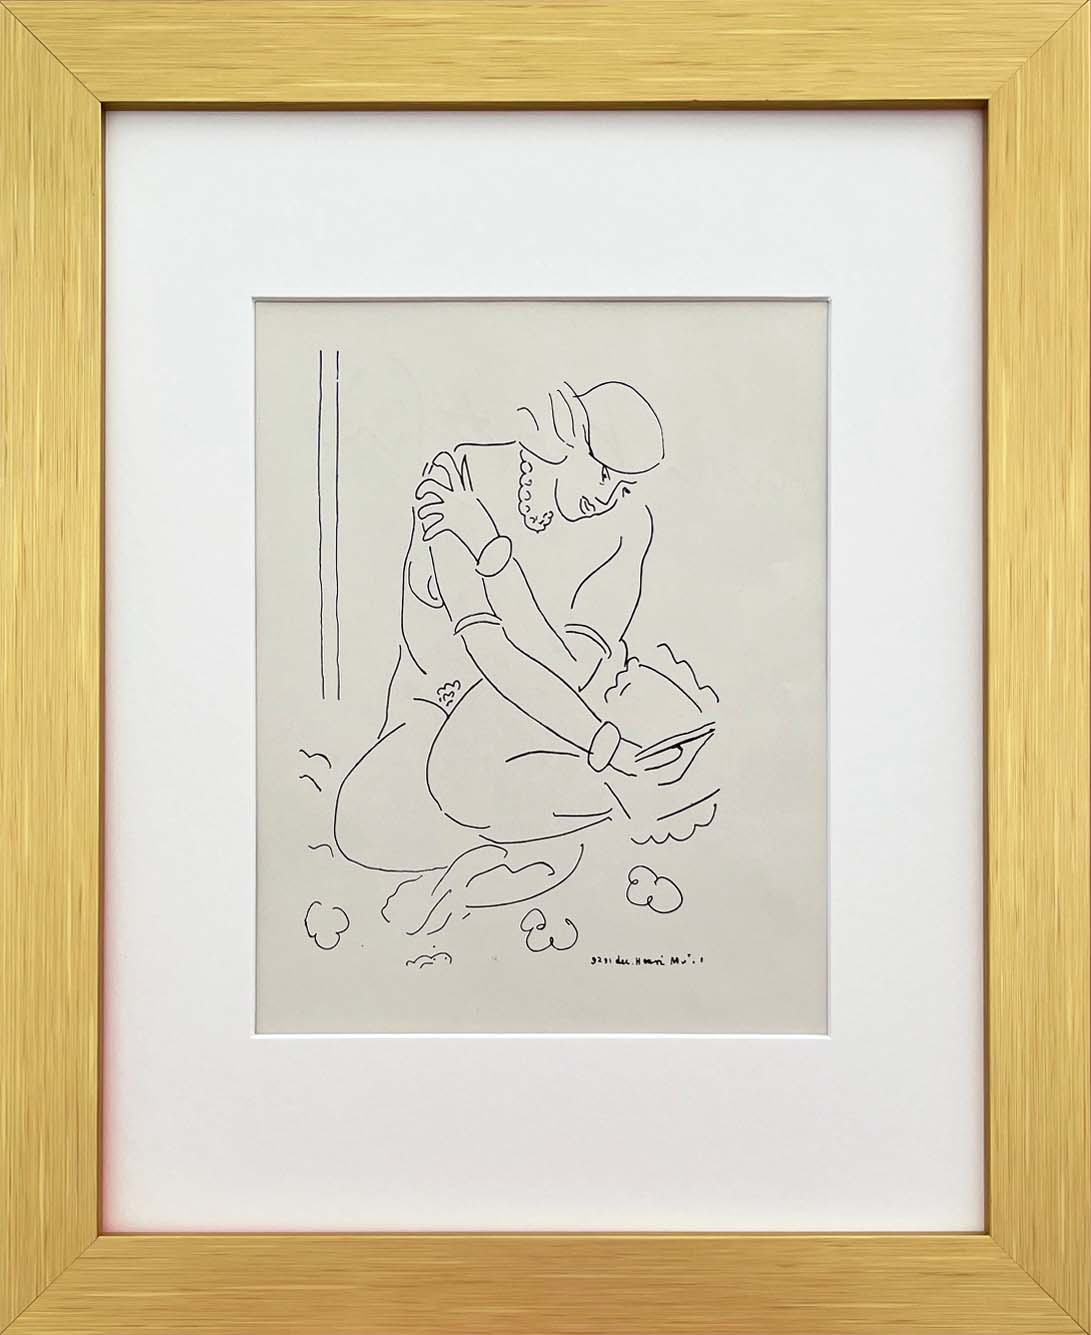 Matisse Lithograph 4 Femme assise avec livre 1968 framed